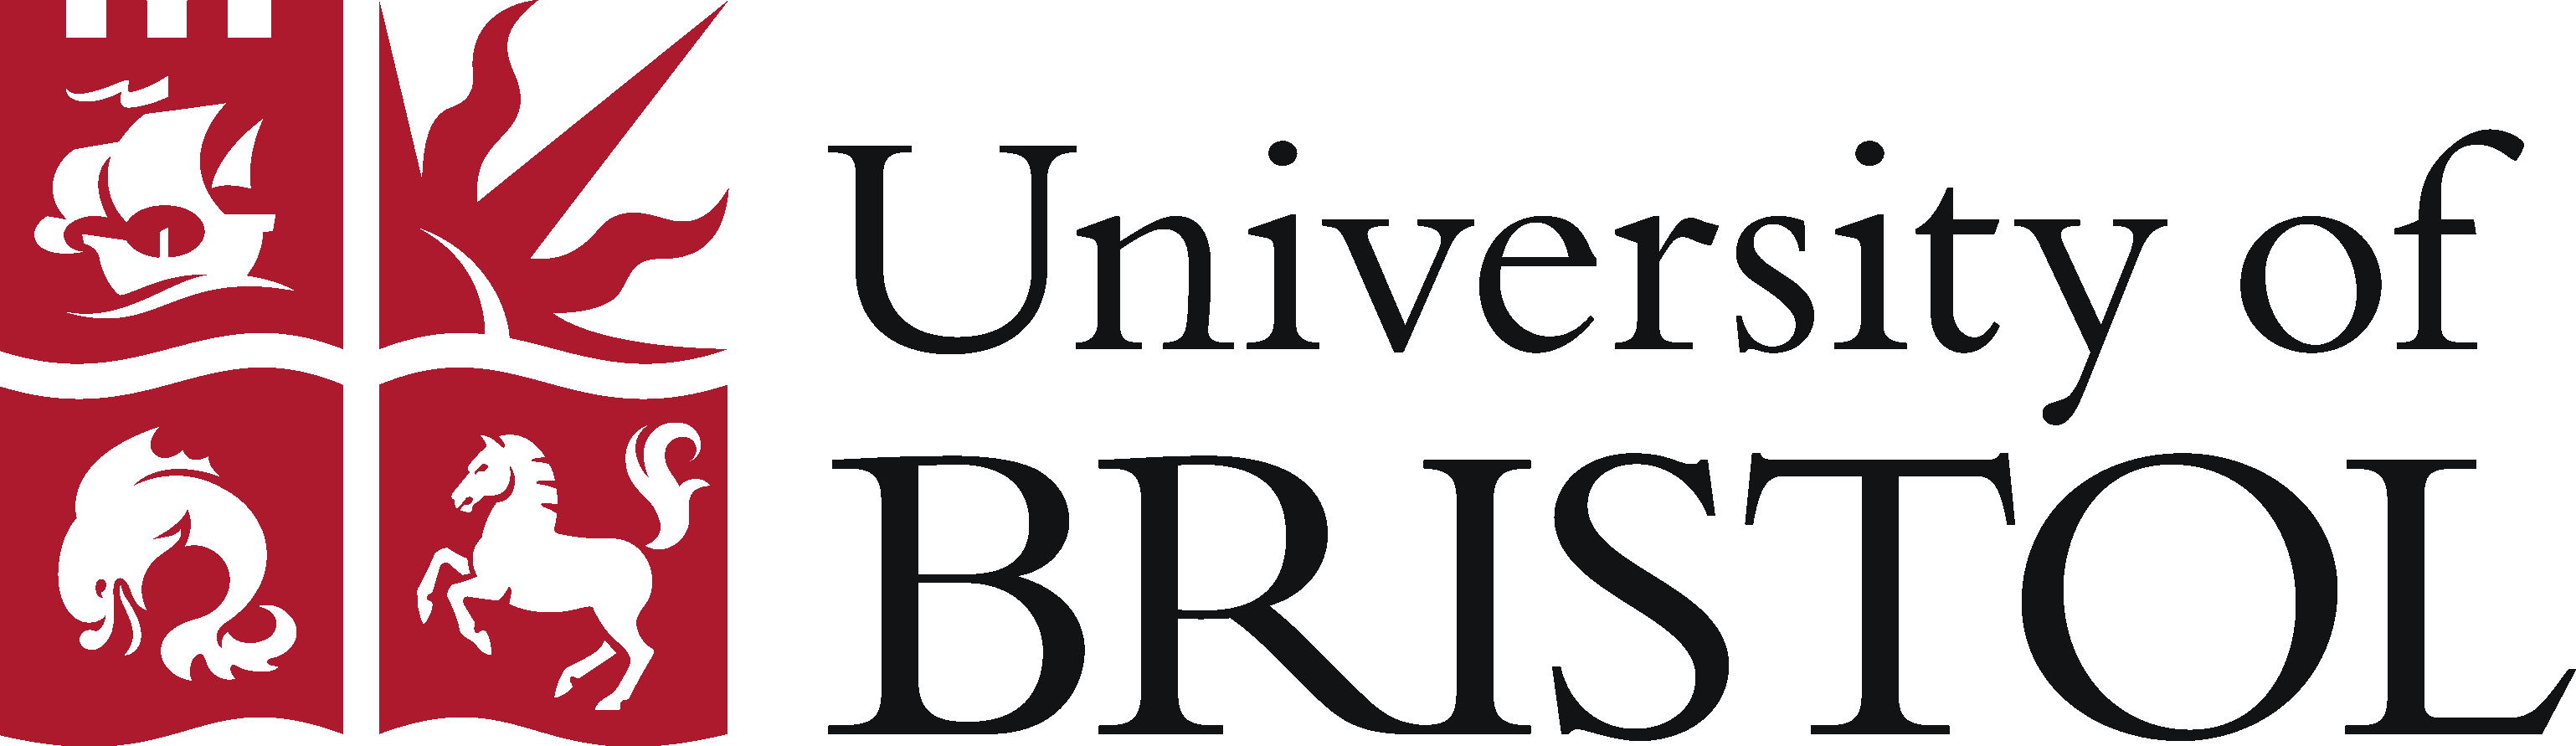 ECHORD : University of Bristol